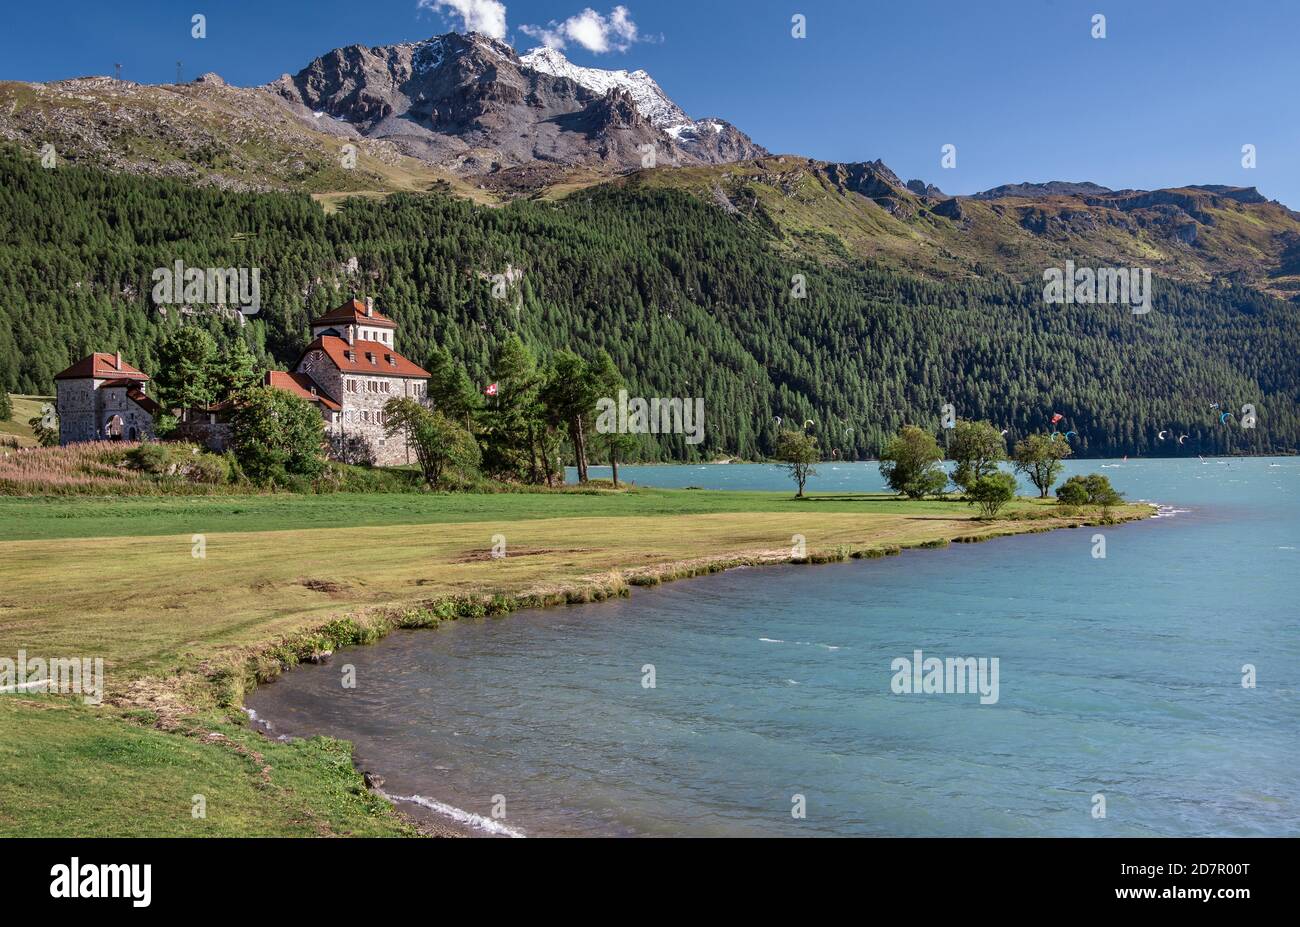 Castle Crap da Sass am Seeufer, Silvaplana, Inn Valley, Bernina Alps, Upper Engadine, Engadine, Grisons, Switzerland Stock Photo